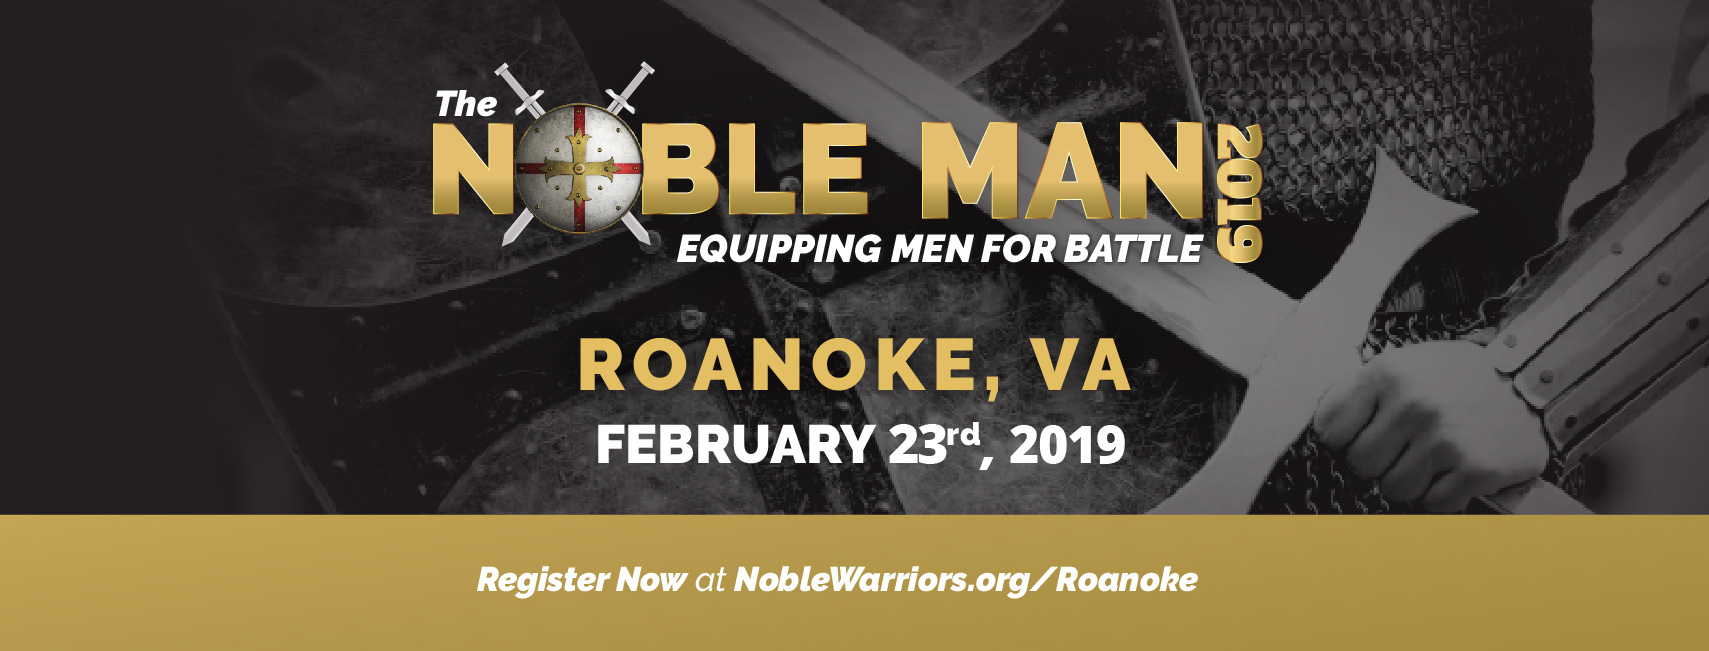 NobleMan-Roanoke-SocialGraphics-2019-02[1]